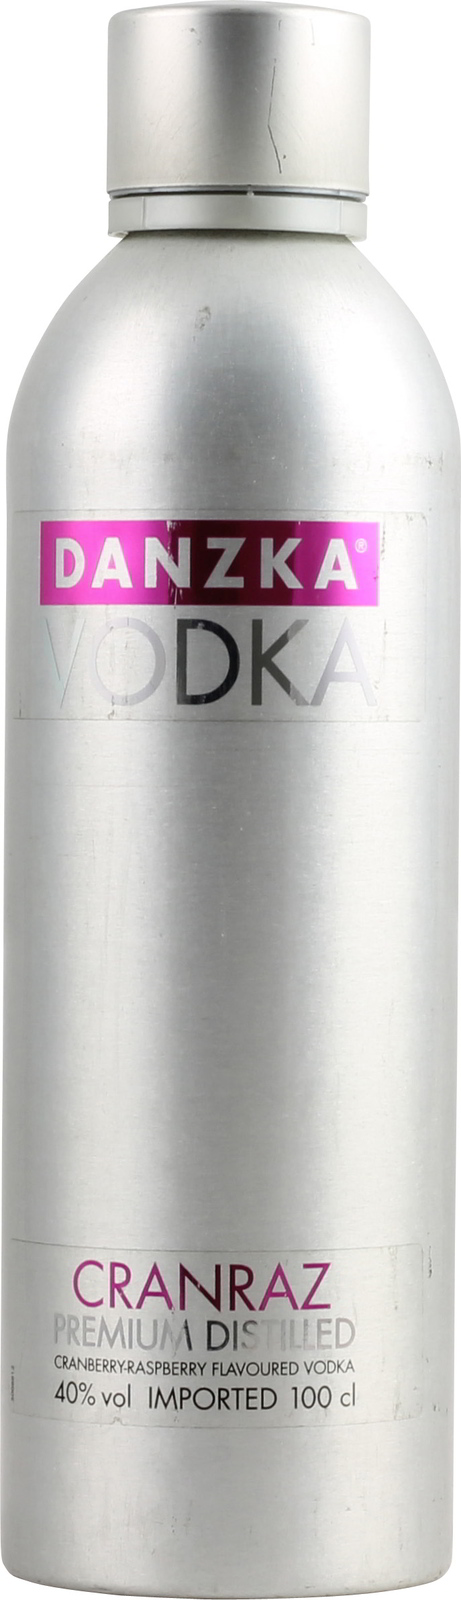 aus kaufen Vodka im Cranraz Dänemark Danzka Shop